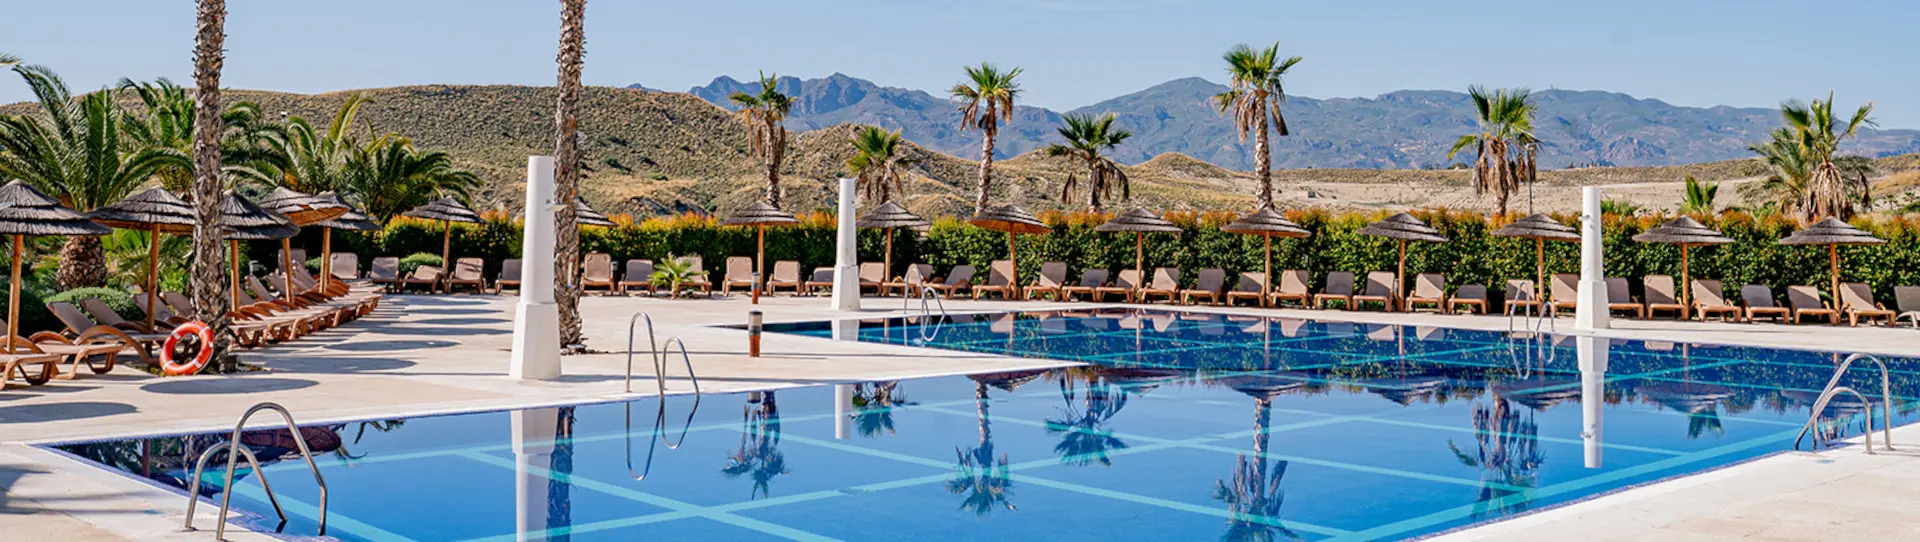 Spain golf holidays - Valle del Este Golf & Spa Hotel - Photo 3